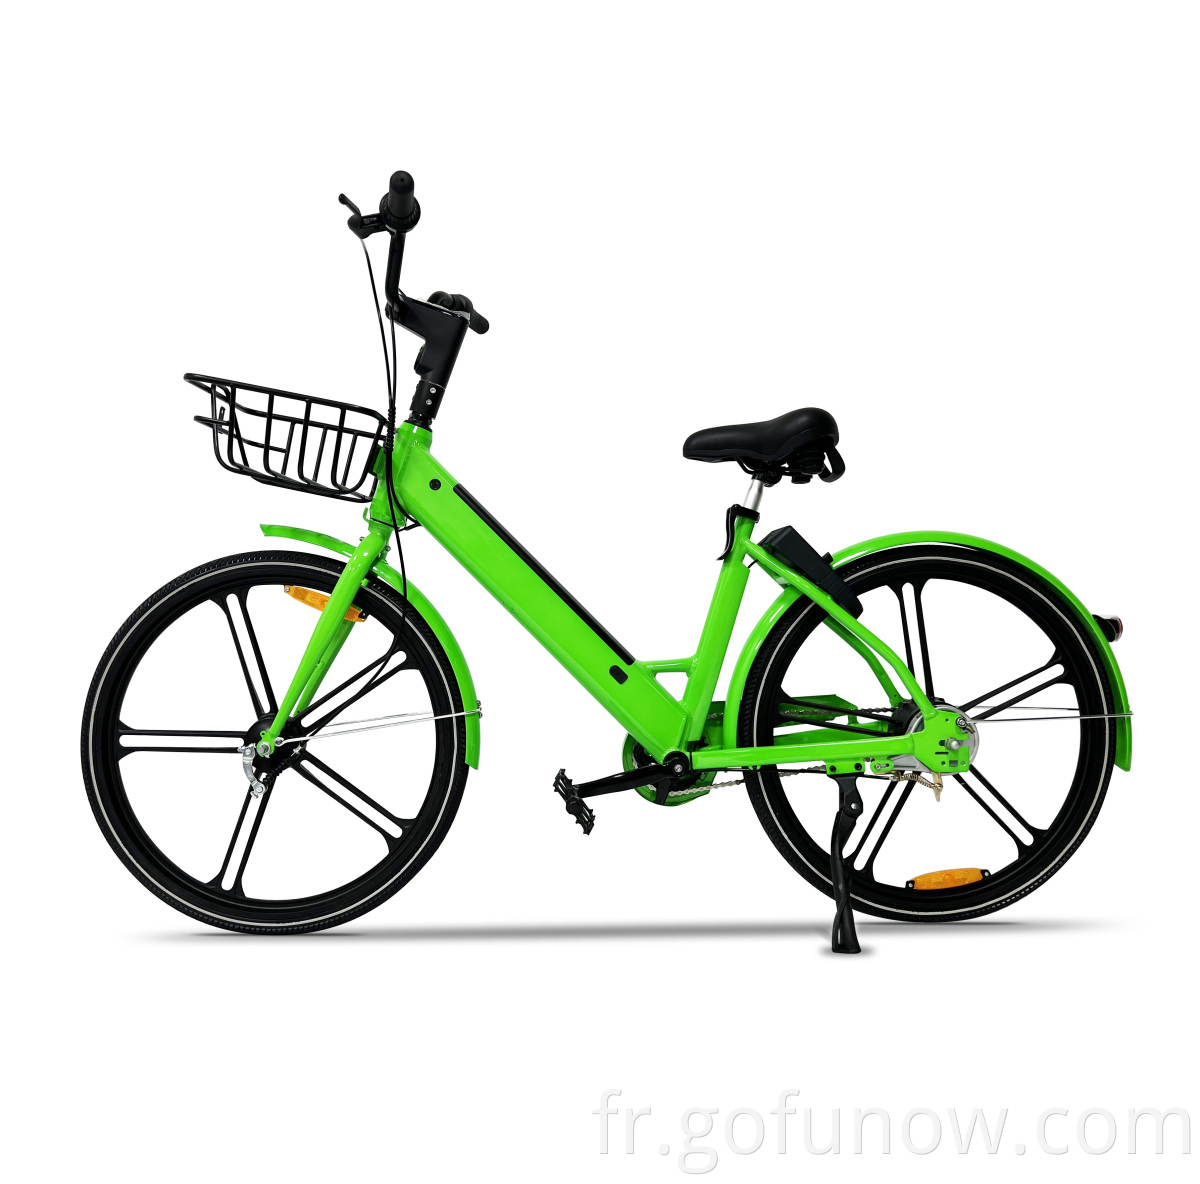 Gofunow Electric bikes VB26 Pro